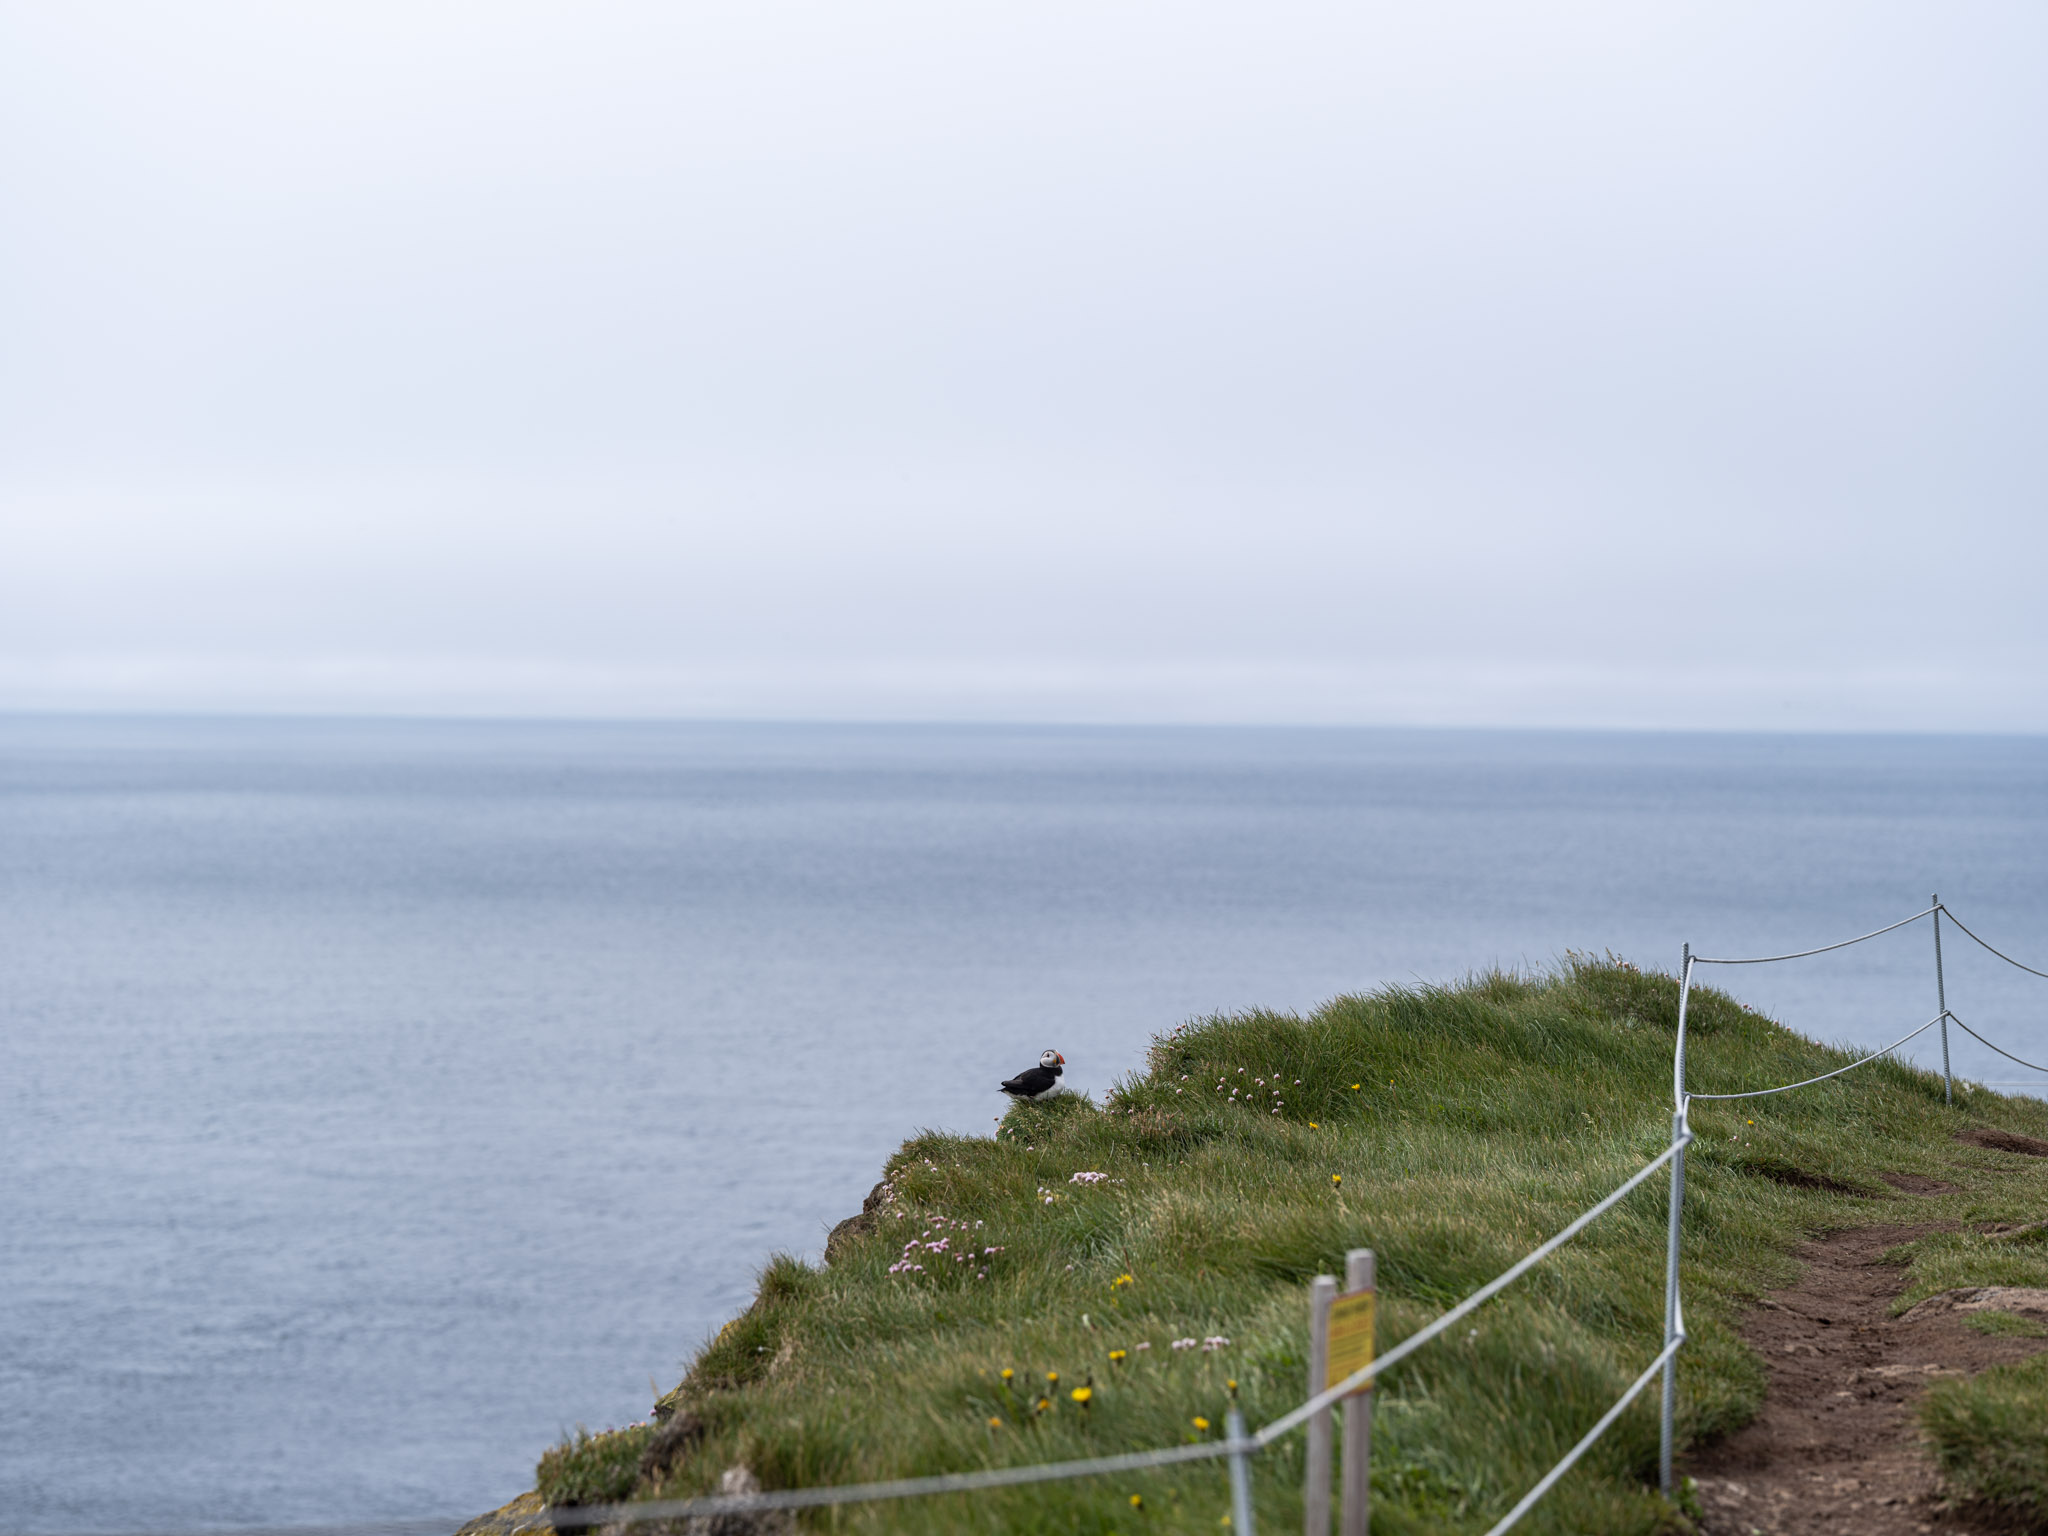 a bird on a cliff overlooking the ocean